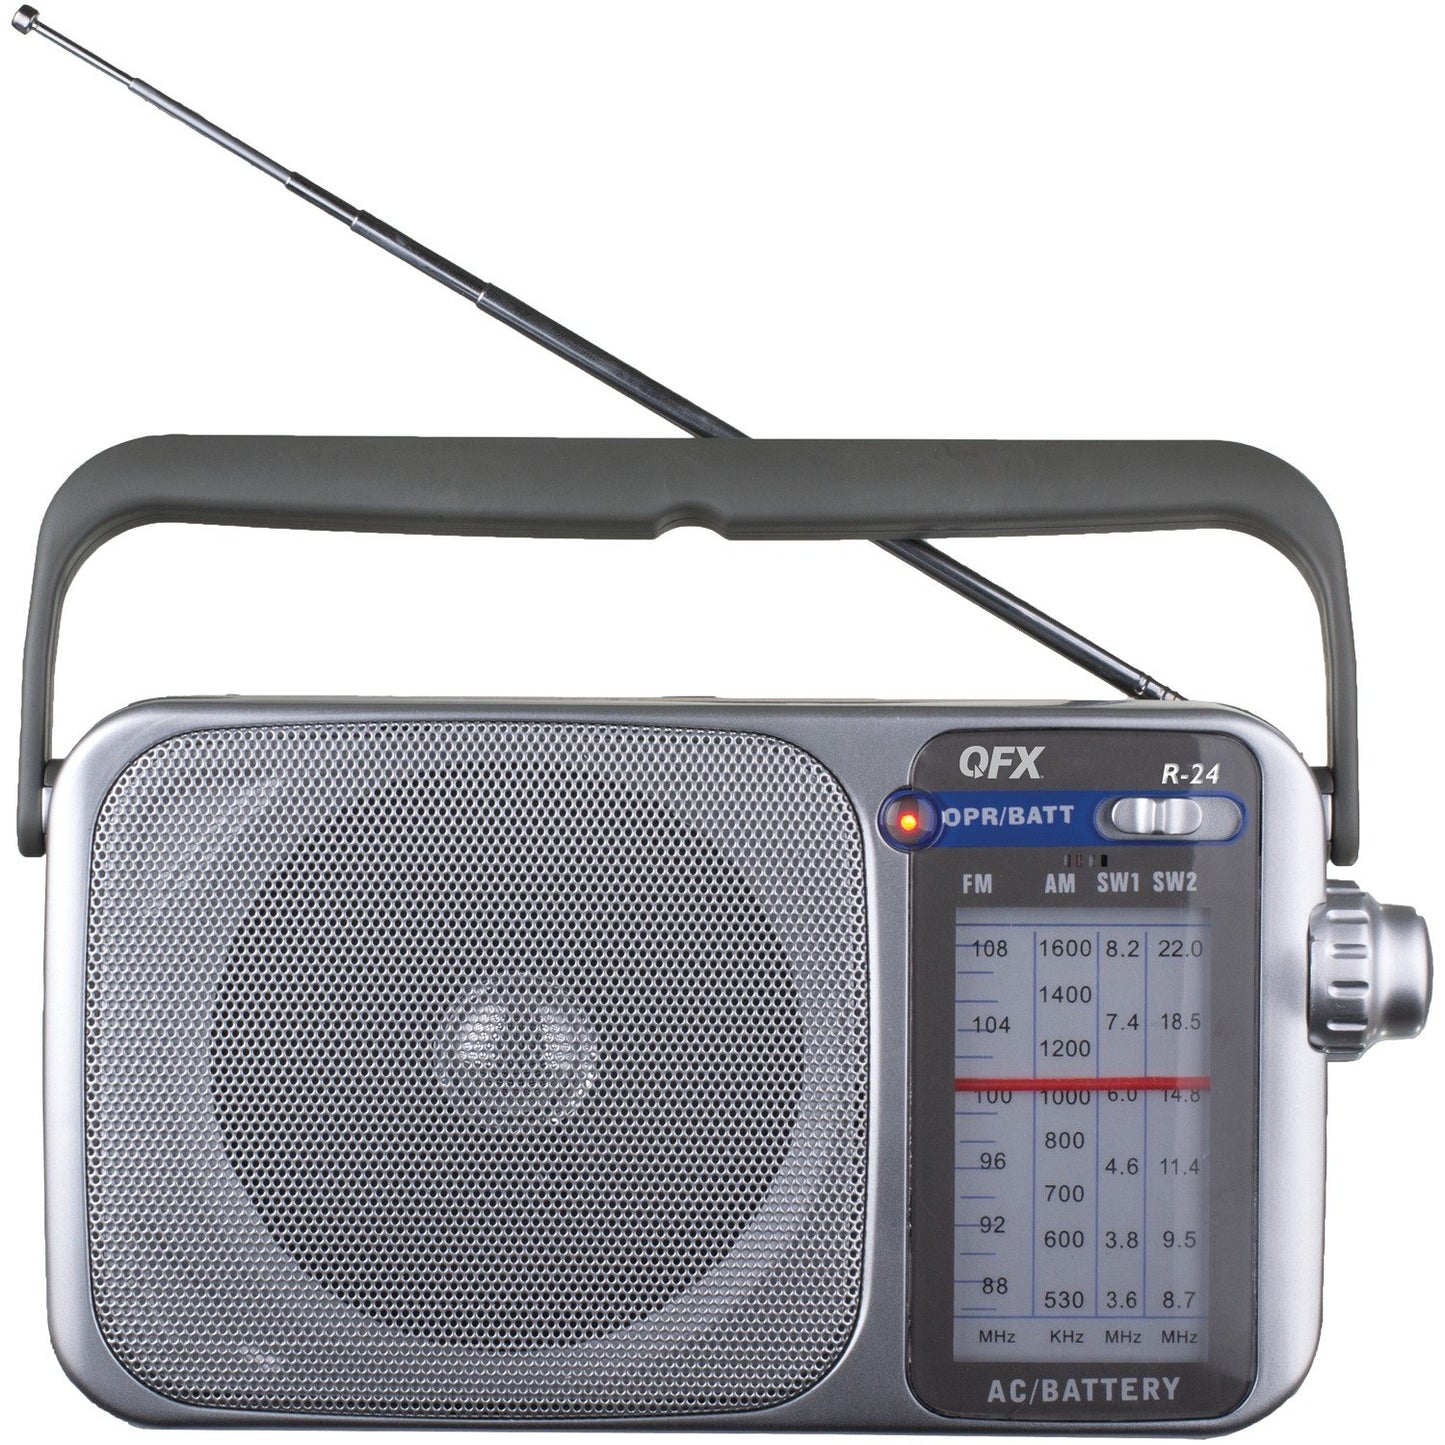 Qfx R24 Retro AM/FM/SW1 and SW2 Portable Radio